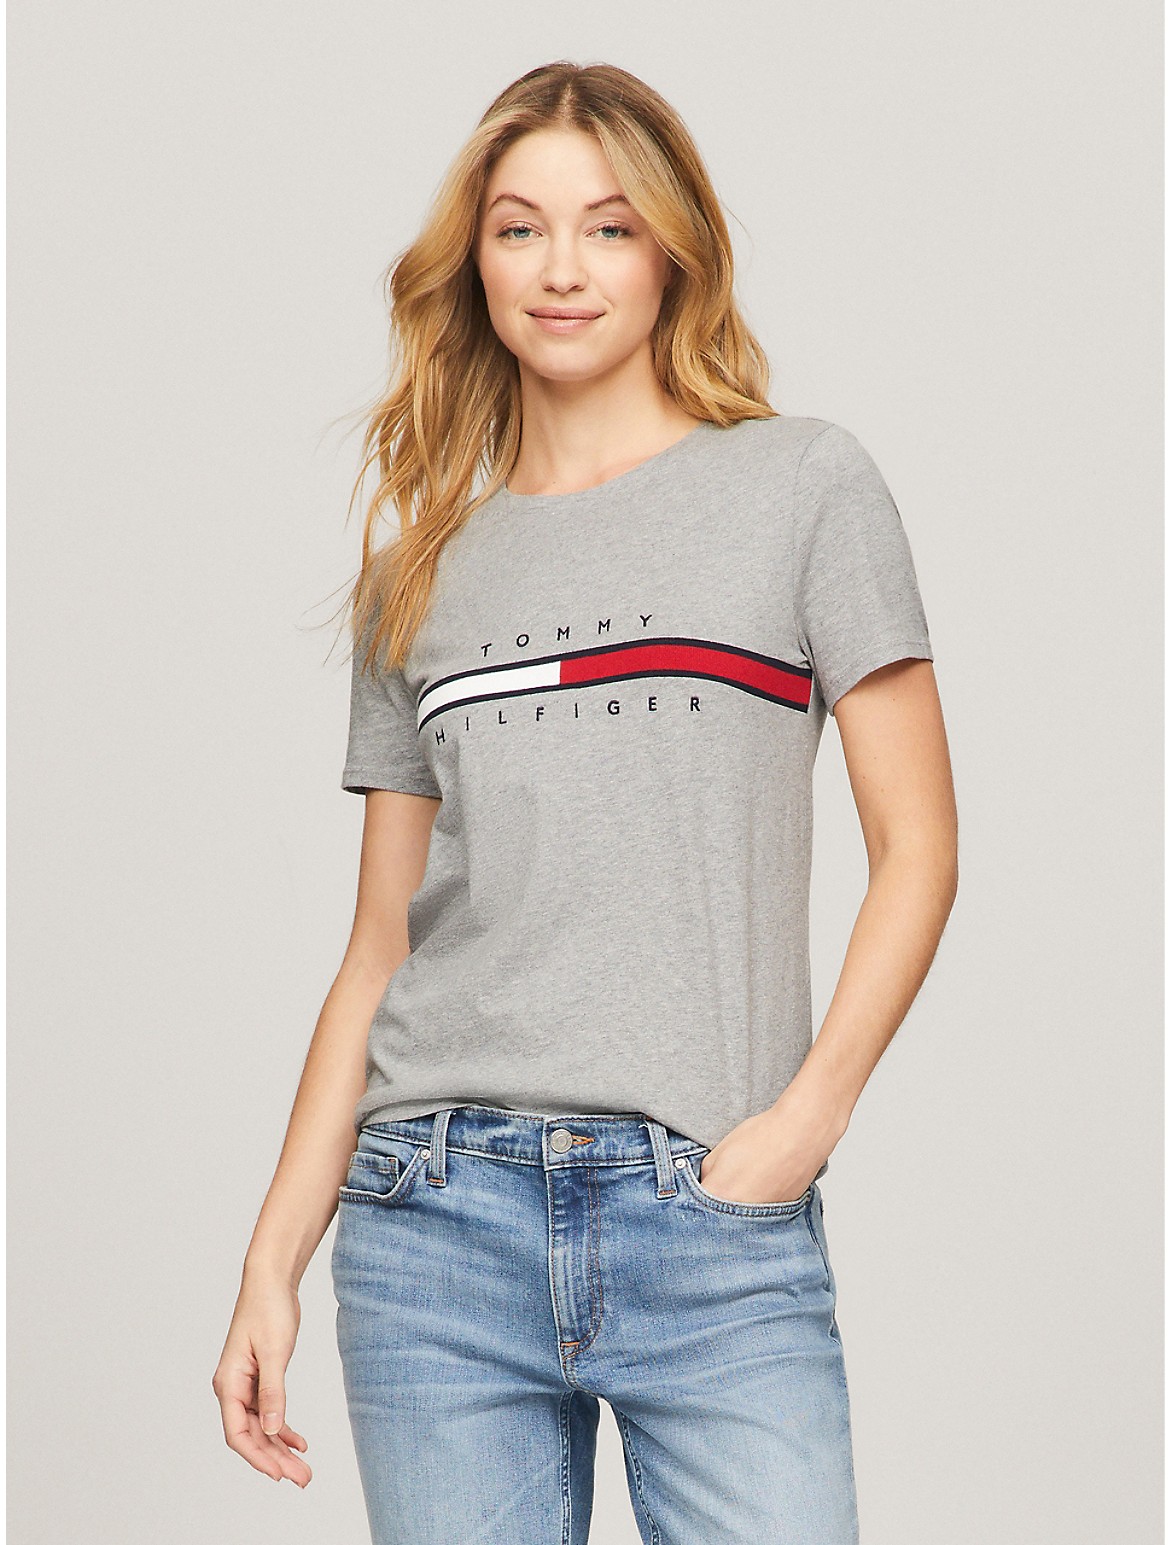 Tommy Hilfiger Women's Embroidered Flag Stripe Logo T-Shirt